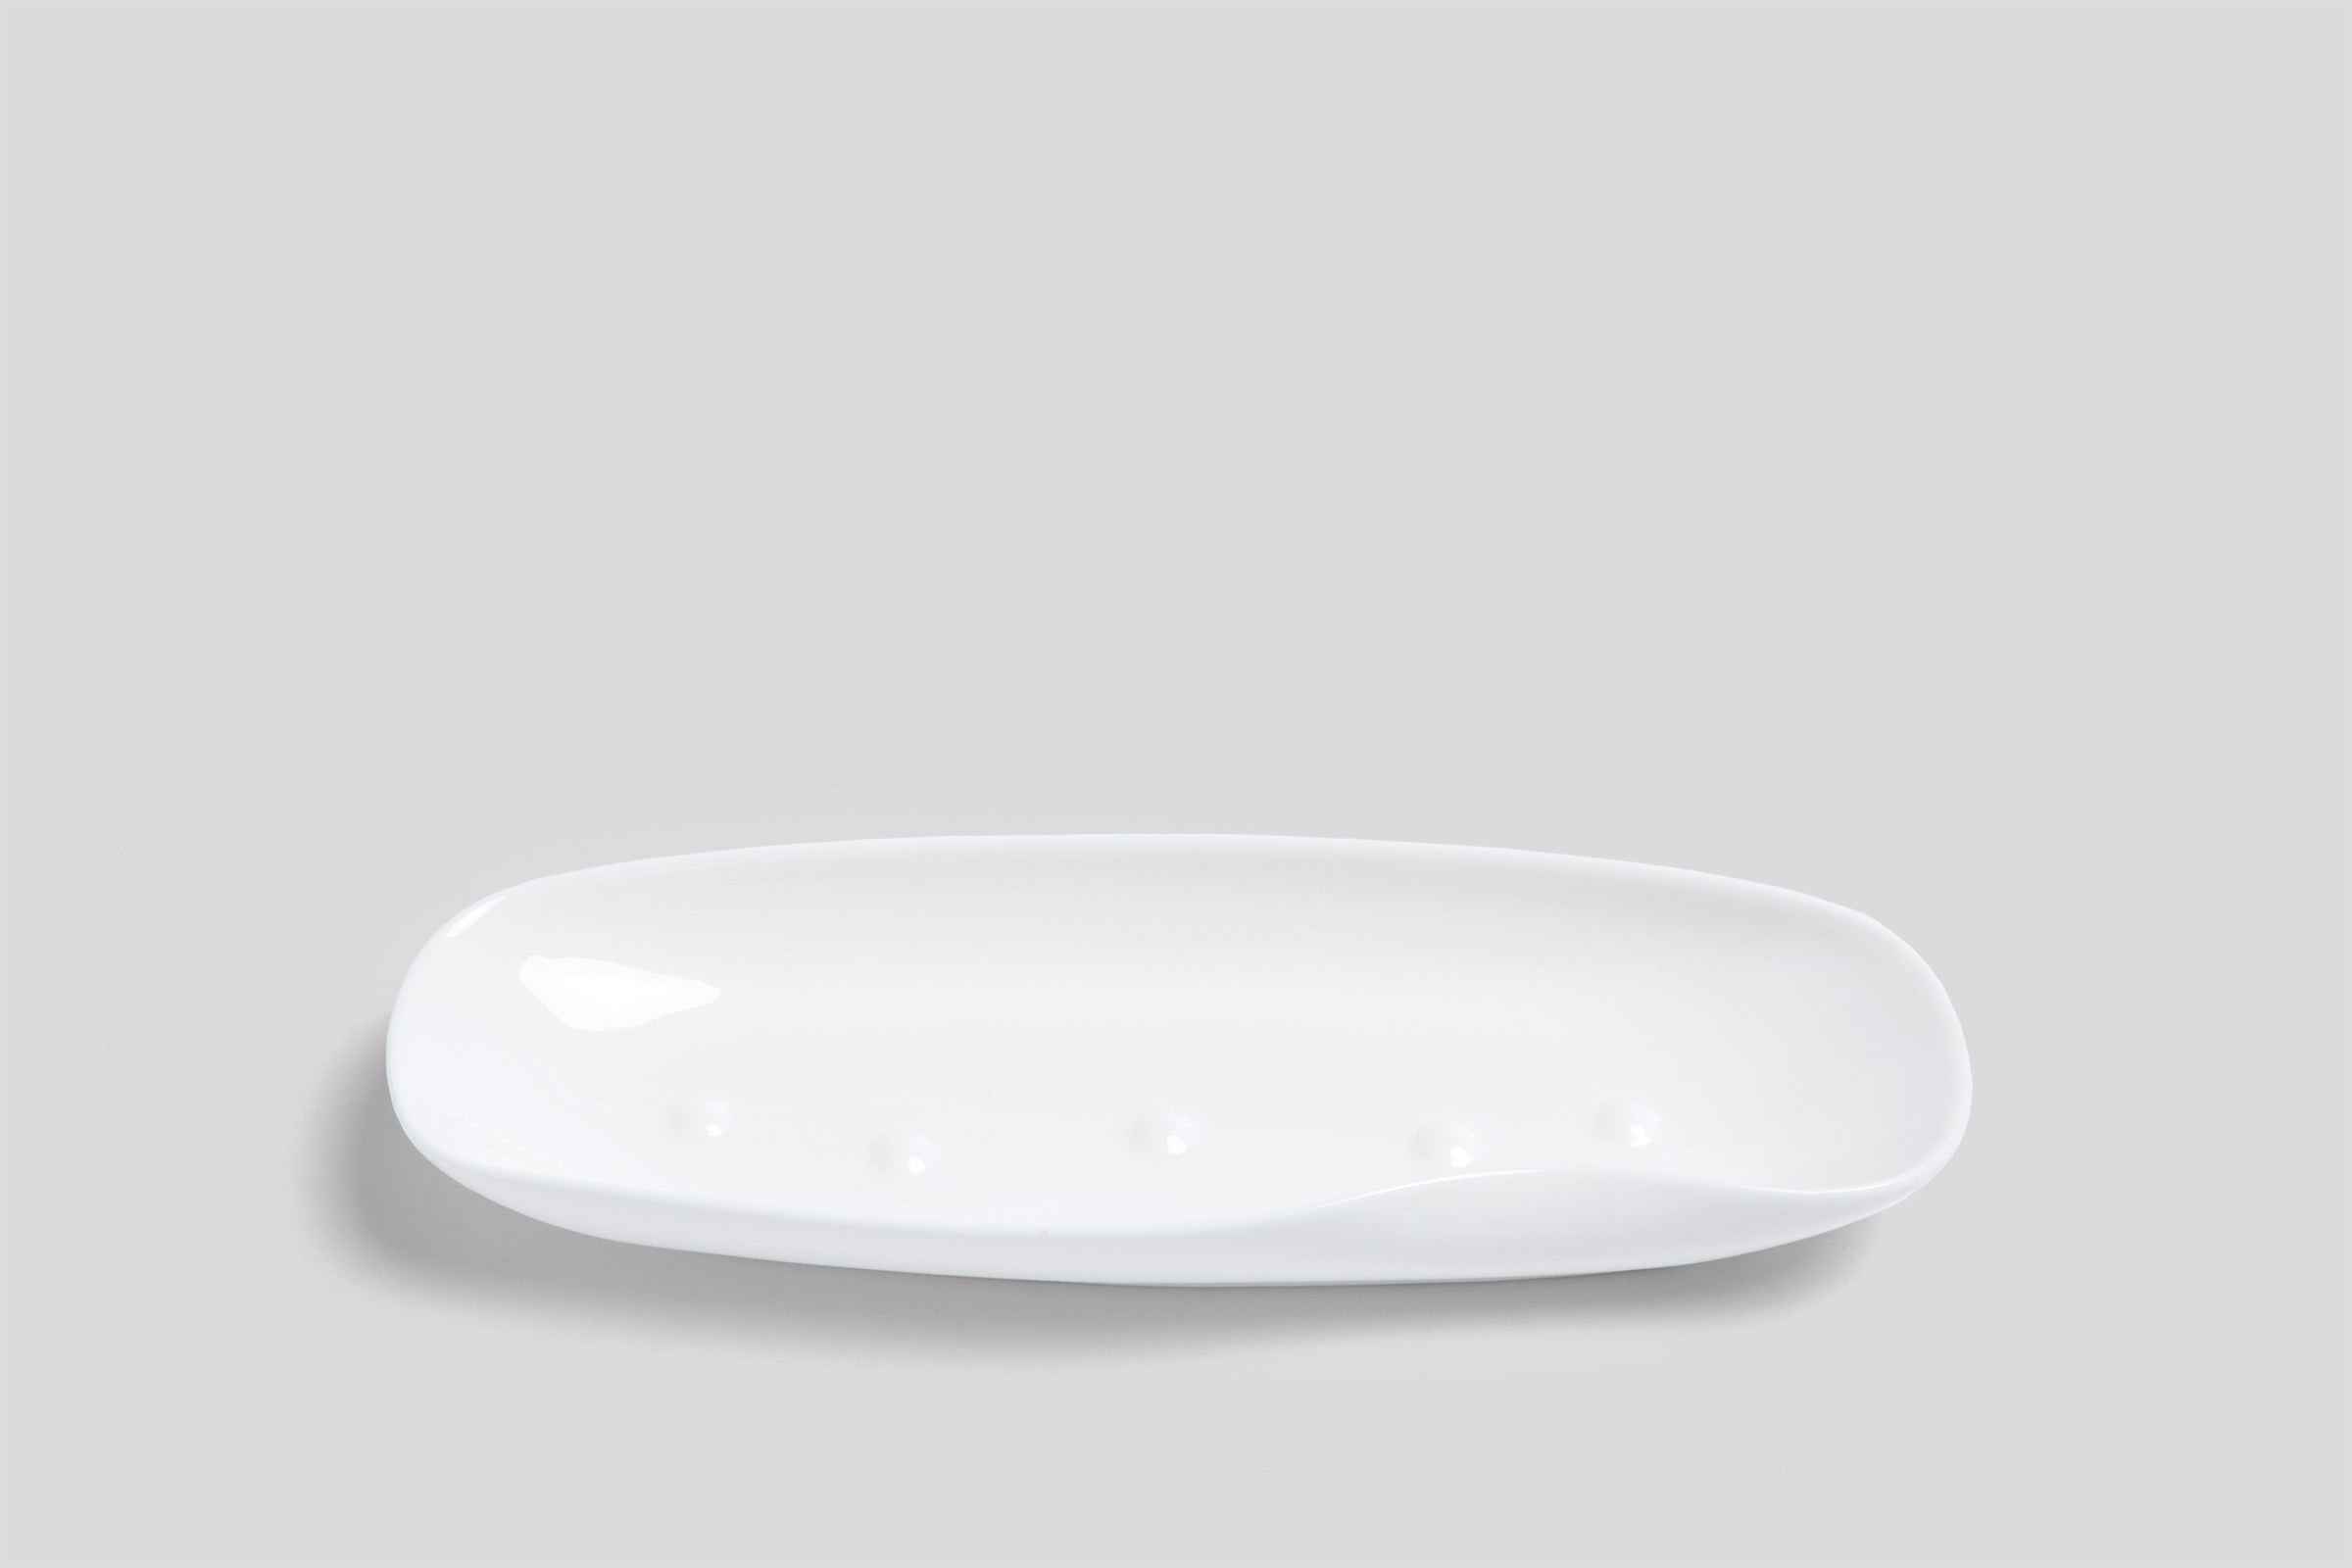 Bodo Sperlein White Sculptural Oval Dish